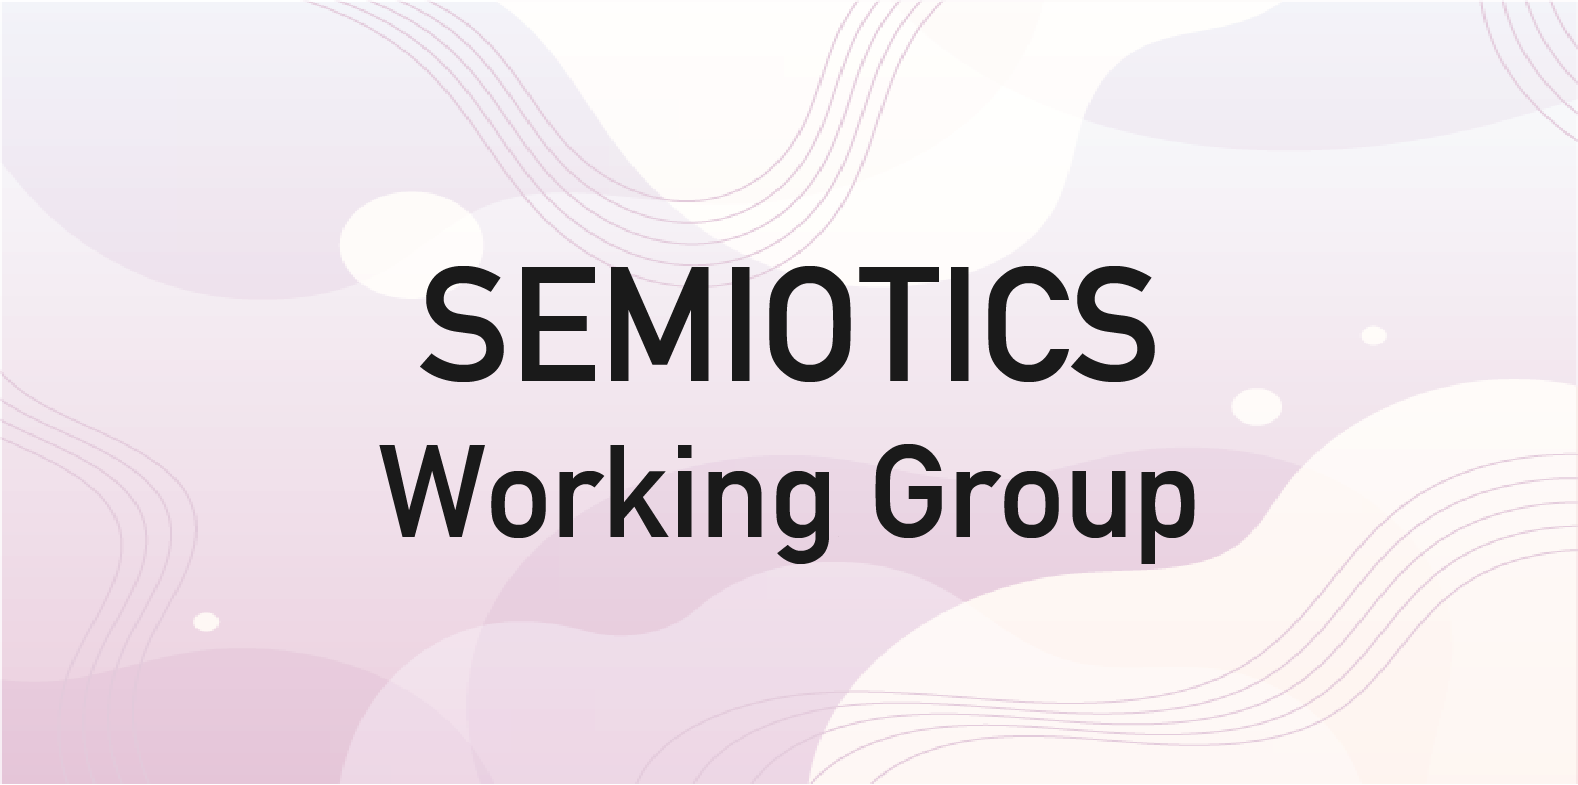 Semiotics Working Group